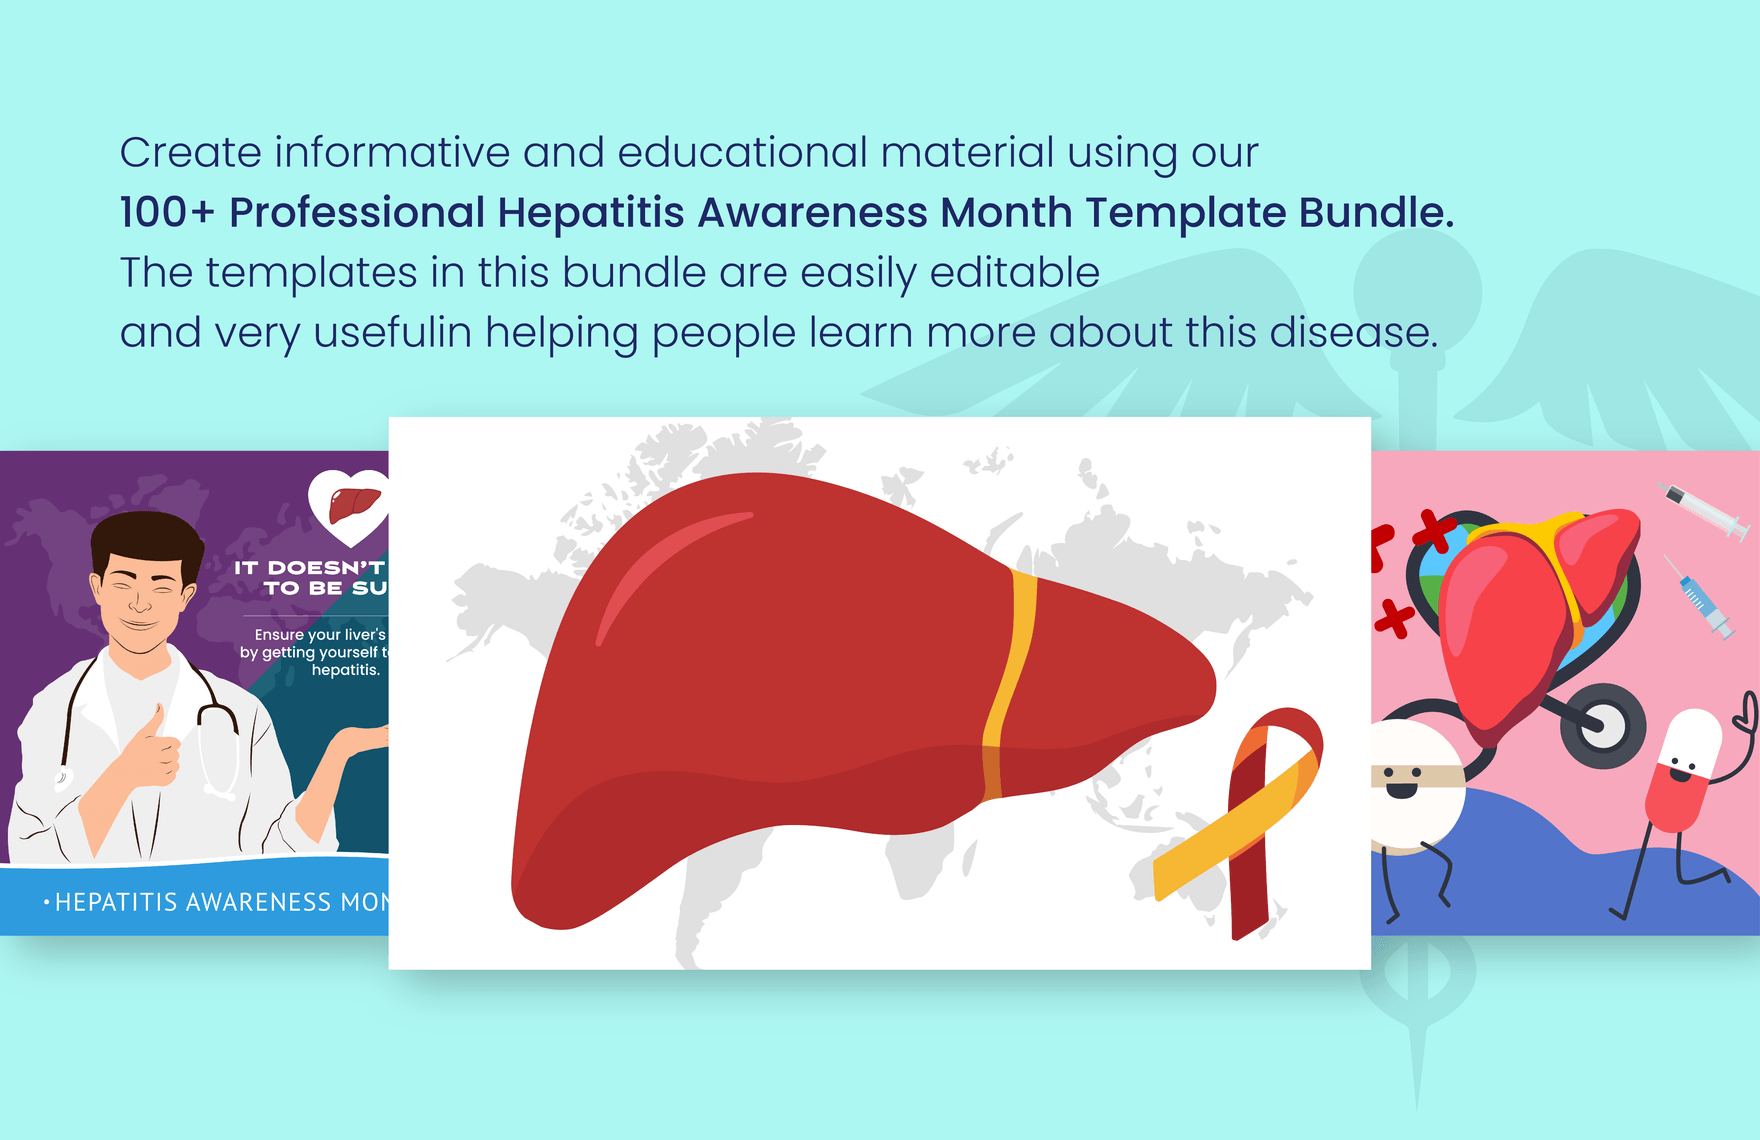 Free 30+ Professional Hepatitis Awareness Month Template Bundle in Word, Google Docs, PDF, Illustrator, PSD, EPS, SVG, PNG, JPEG